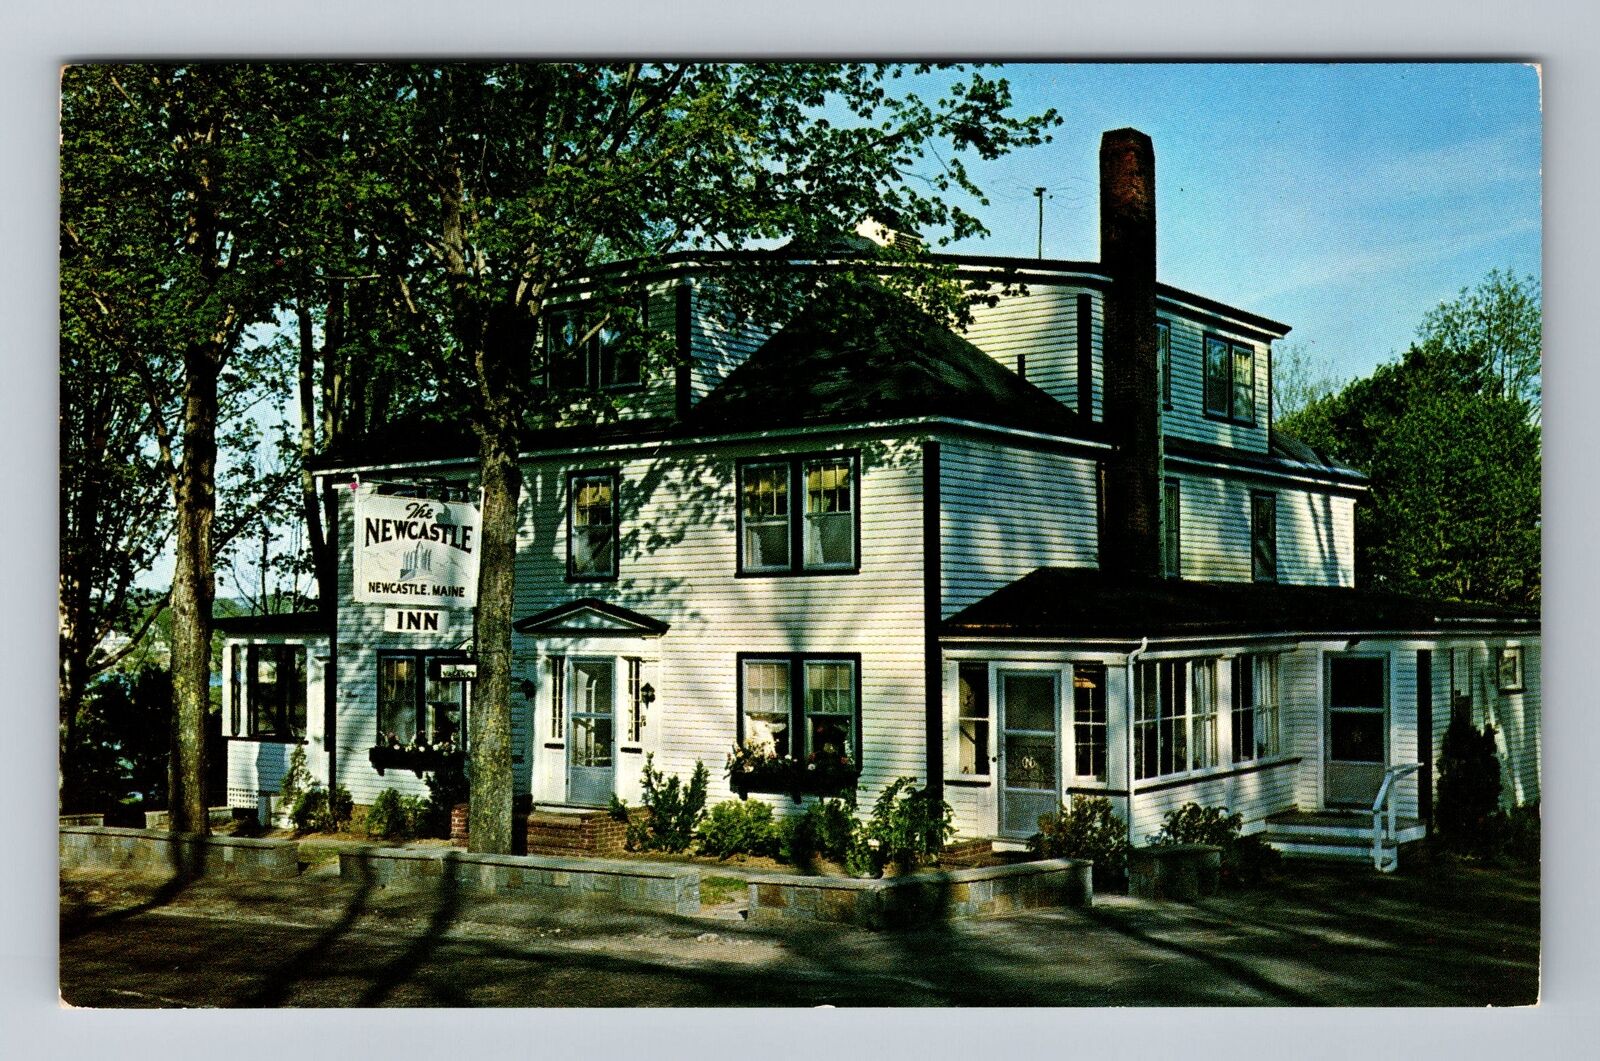 Newcastle ME-Maine, Newcastle Inn, Exterior View, Vintage Postcard